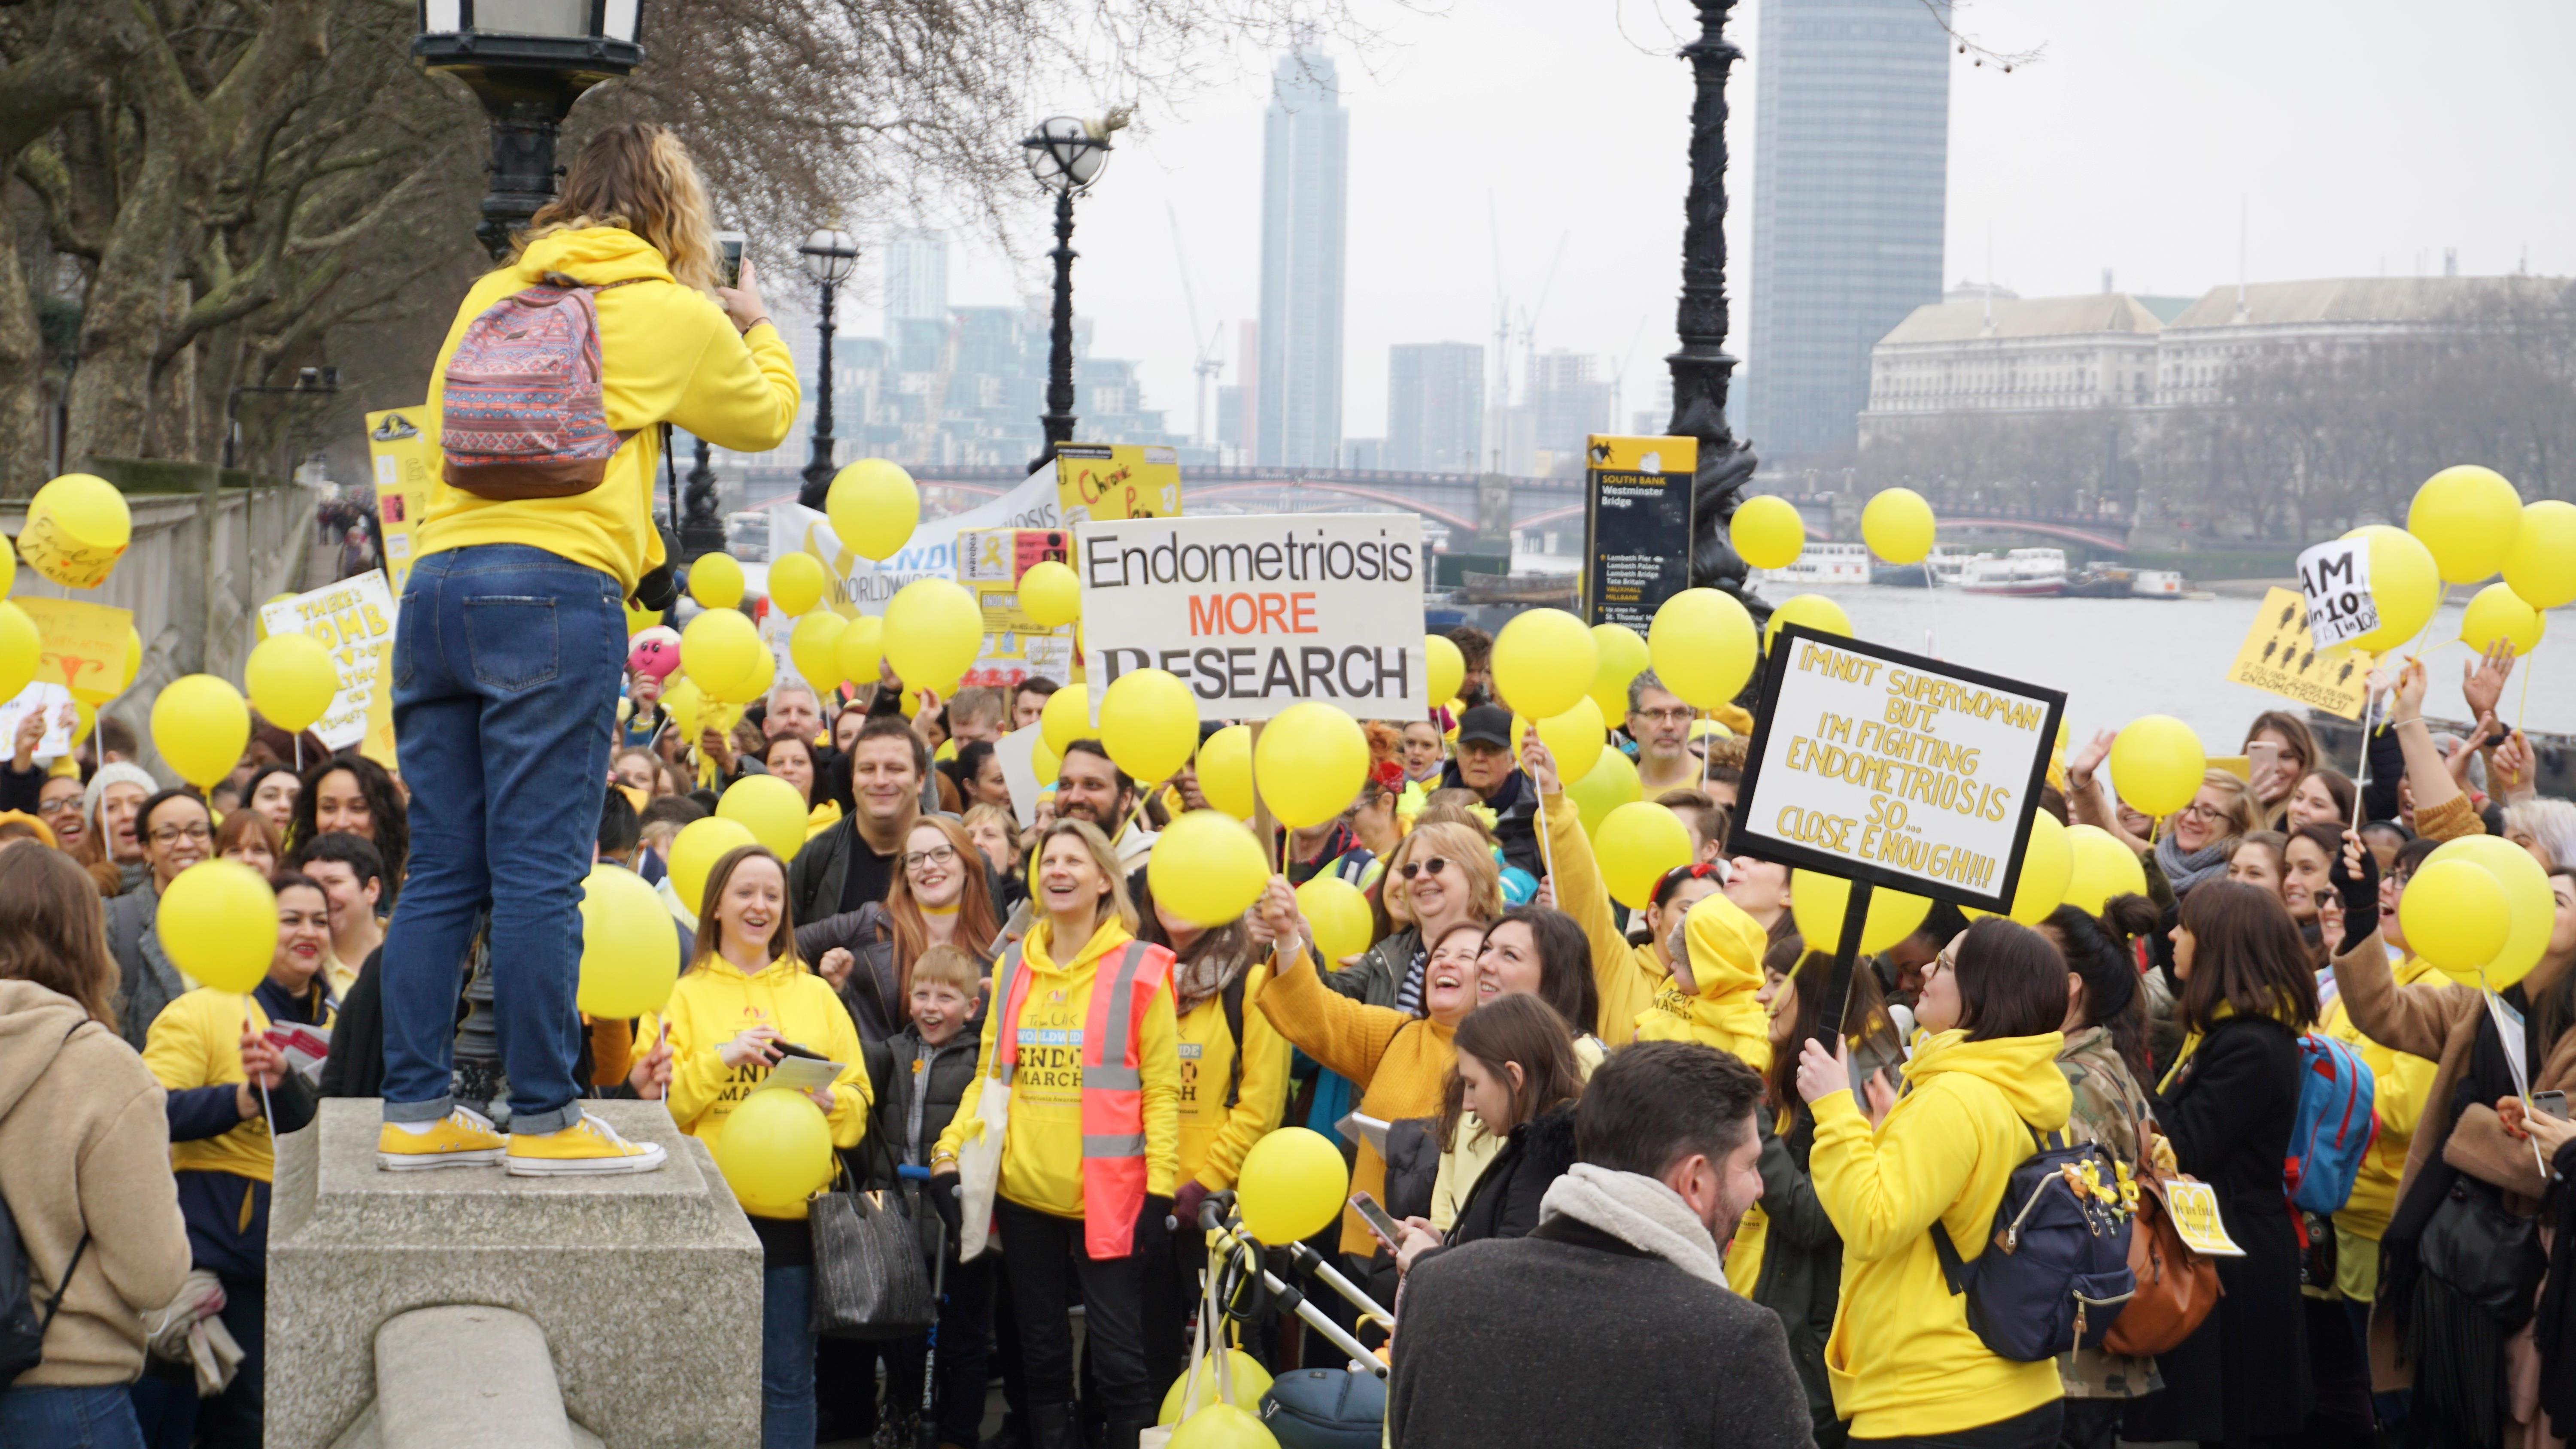 EndoMarch London paints the city yellow